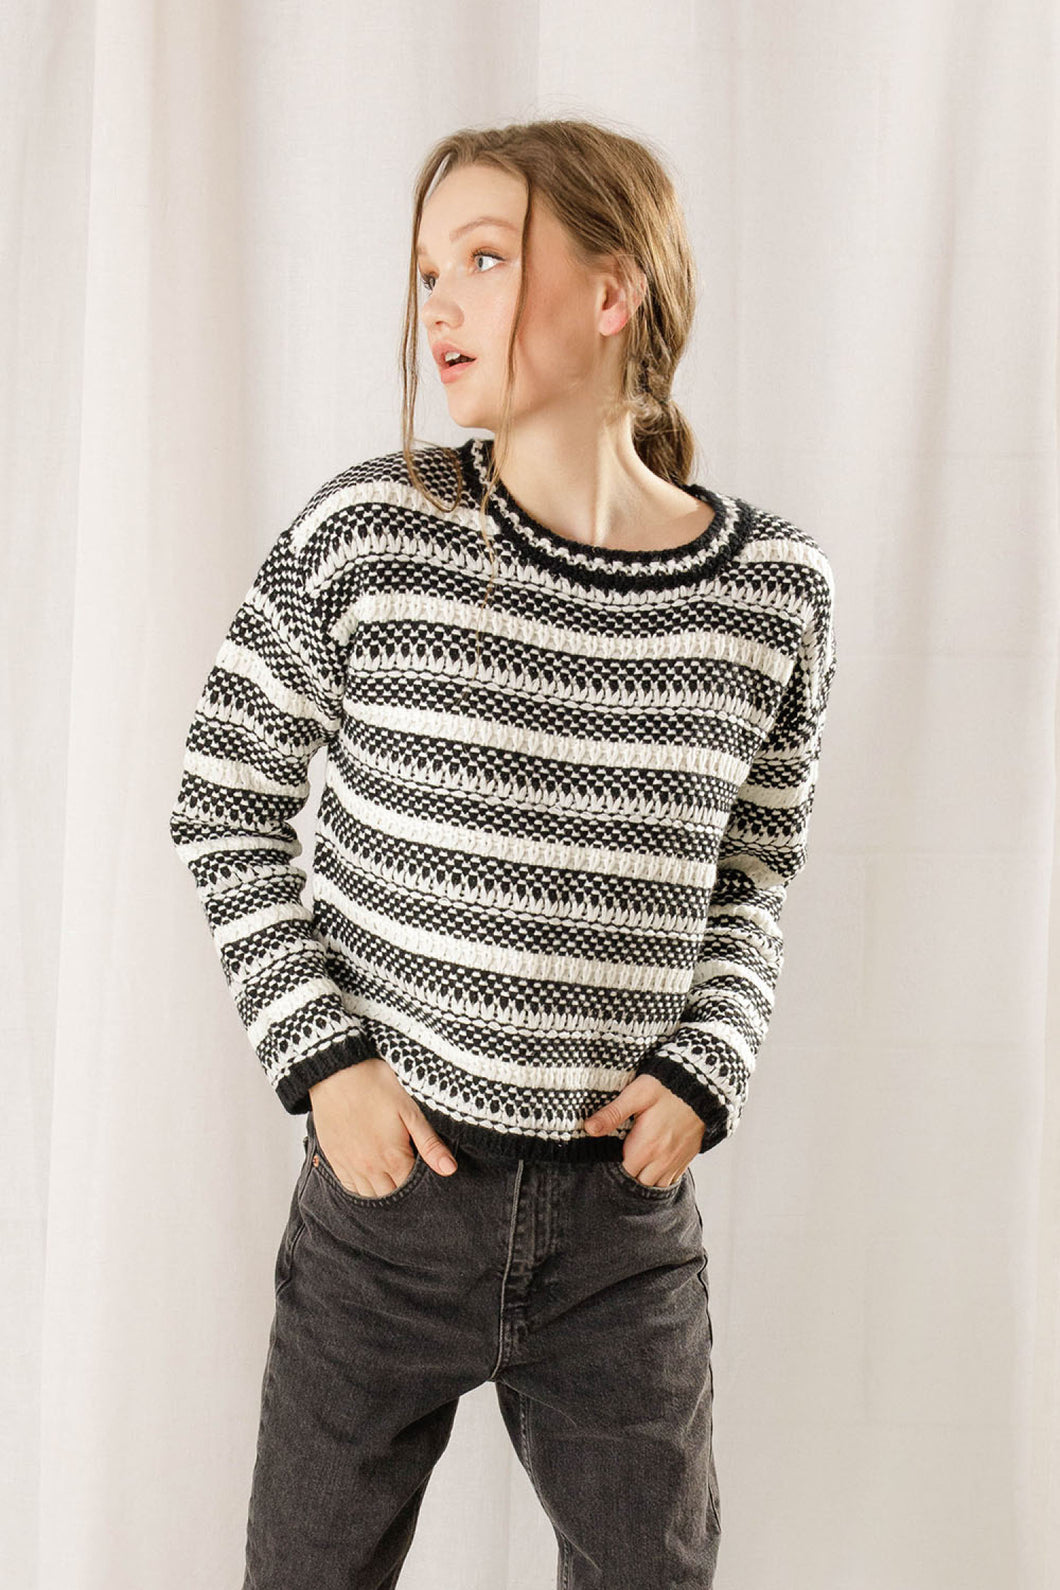 Stripe Crochet Sweater - Black / White